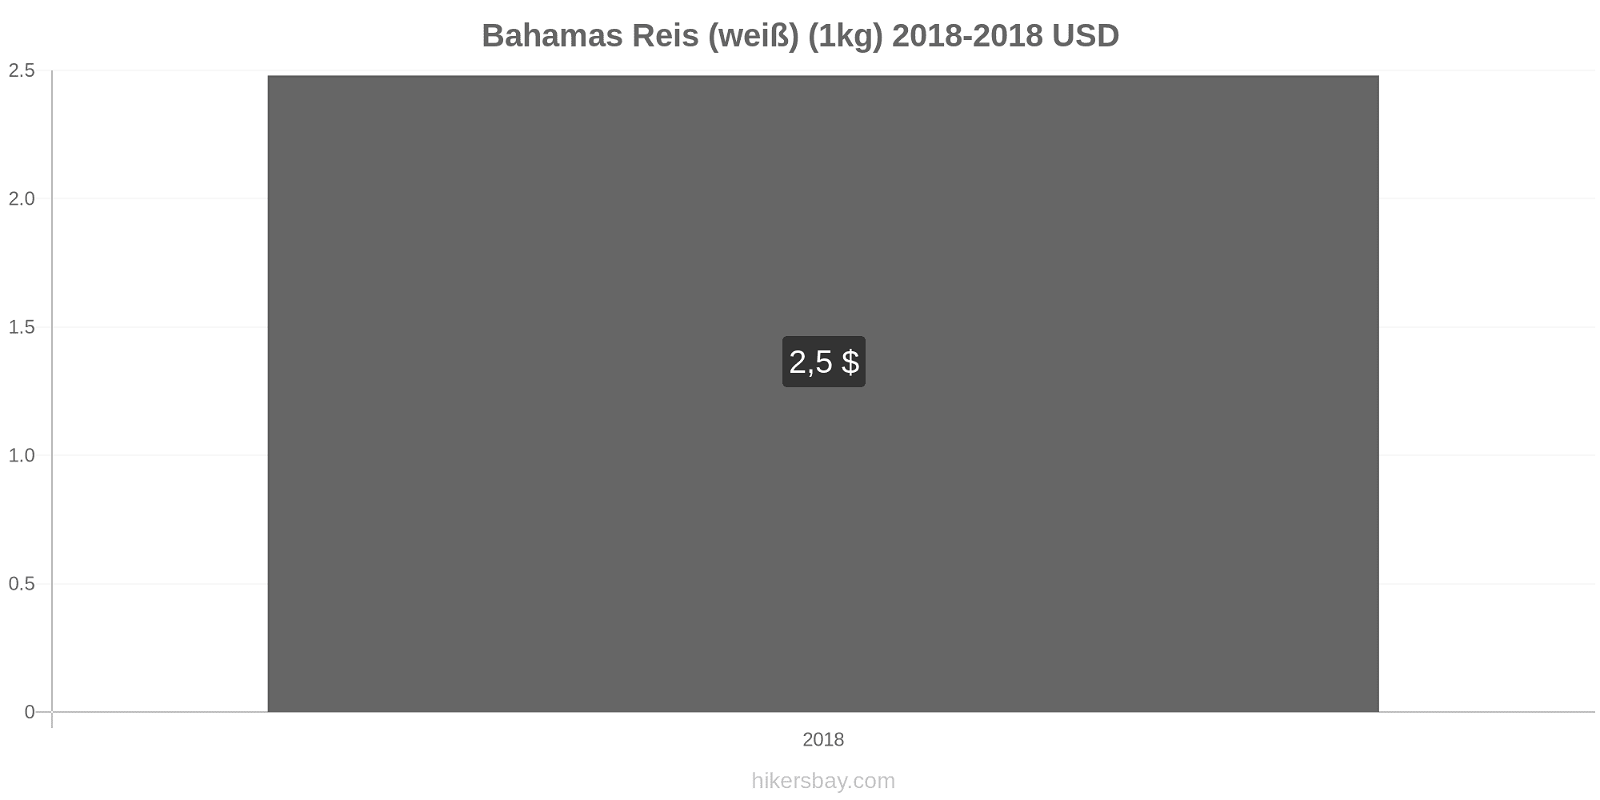 Bahamas Preisänderungen Reis (weiß) (1kg) hikersbay.com